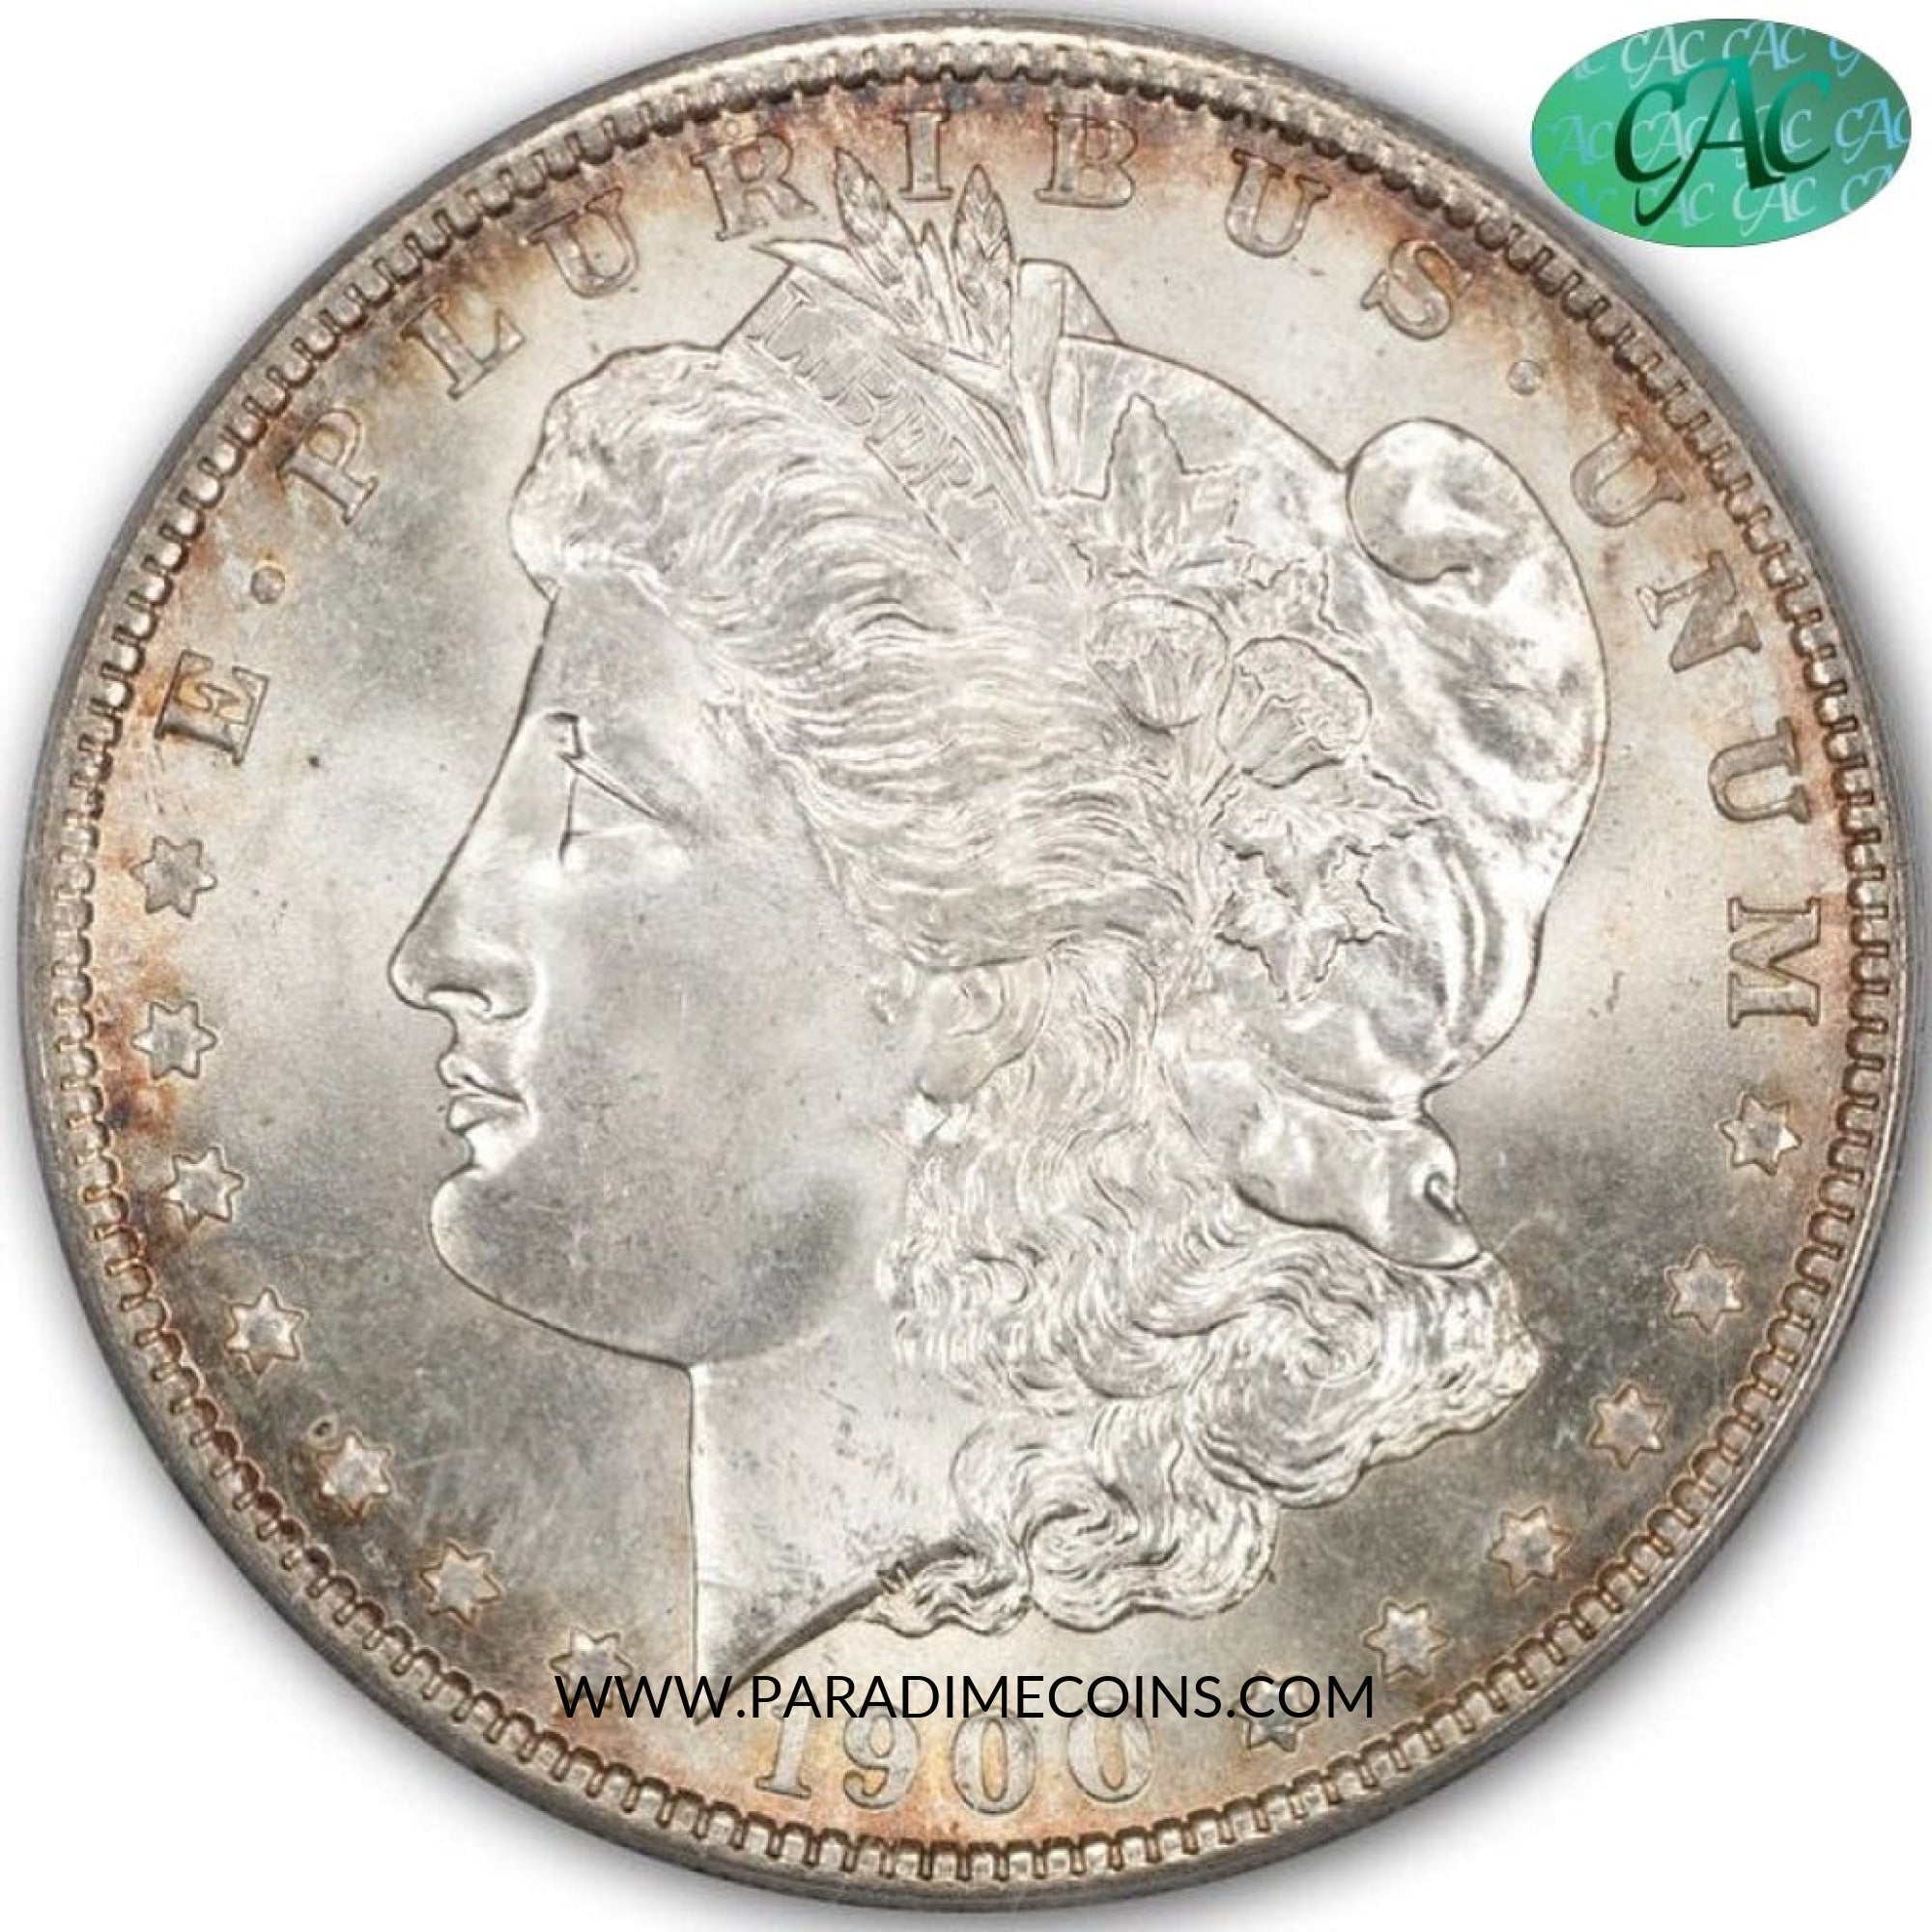 1900-O $1 MS67 OGH PCGS CAC - Paradime Coins | PCGS NGC CACG CAC Rare US Numismatic Coins For Sale